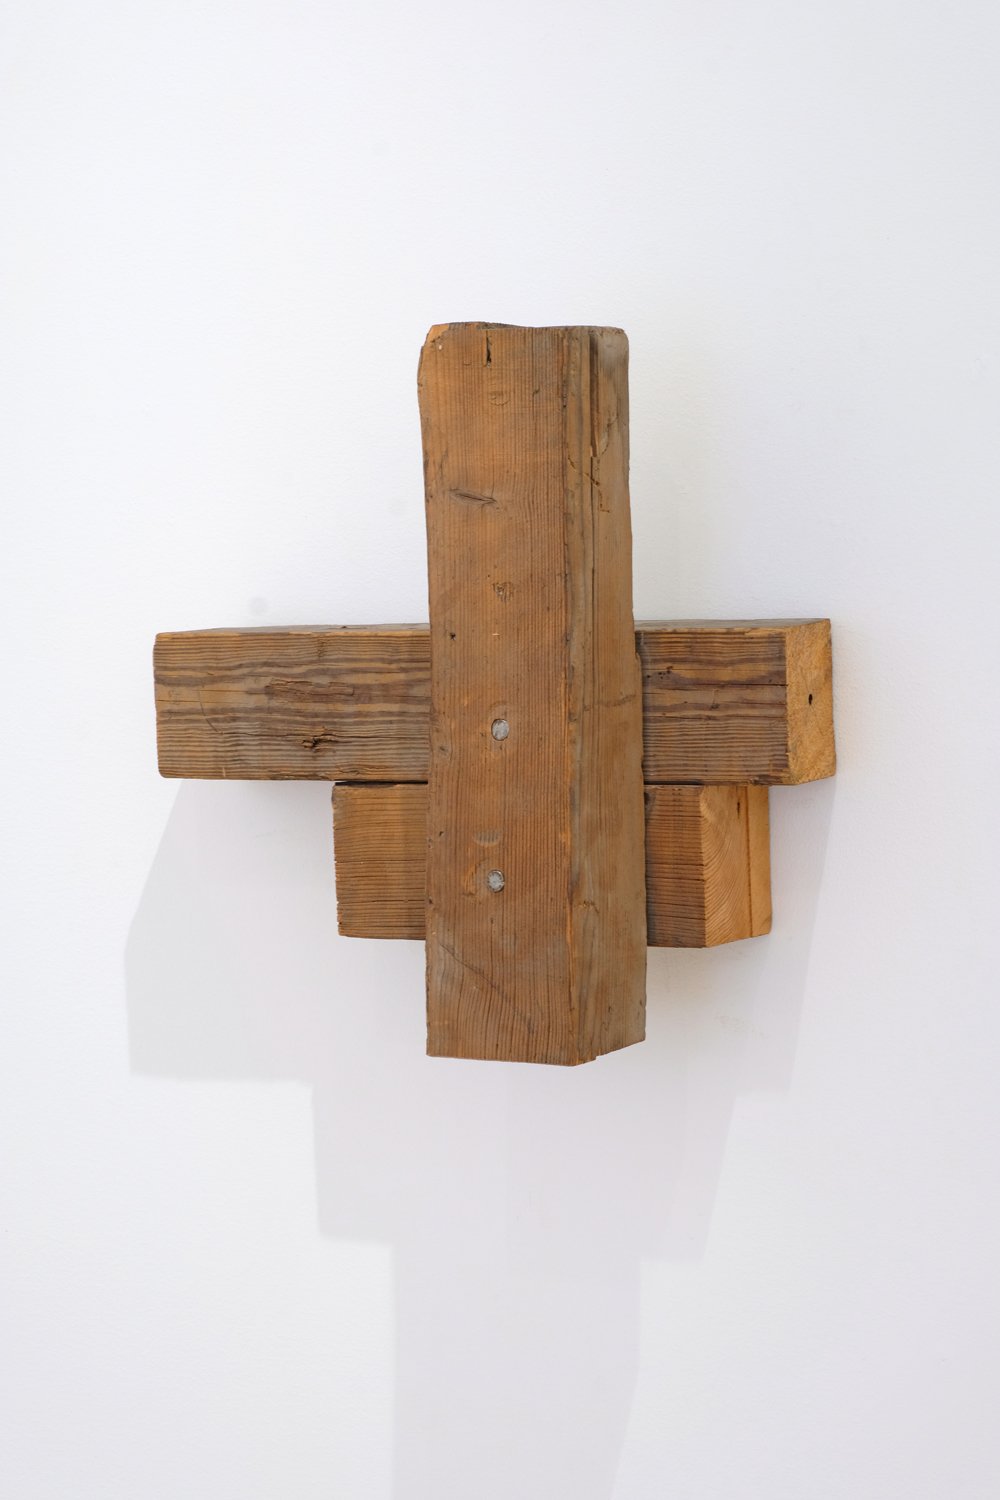   Richard Nonas    Stubs  , 2005  Wood and nails  40 x 39 x 16 cm  (RN0012) 